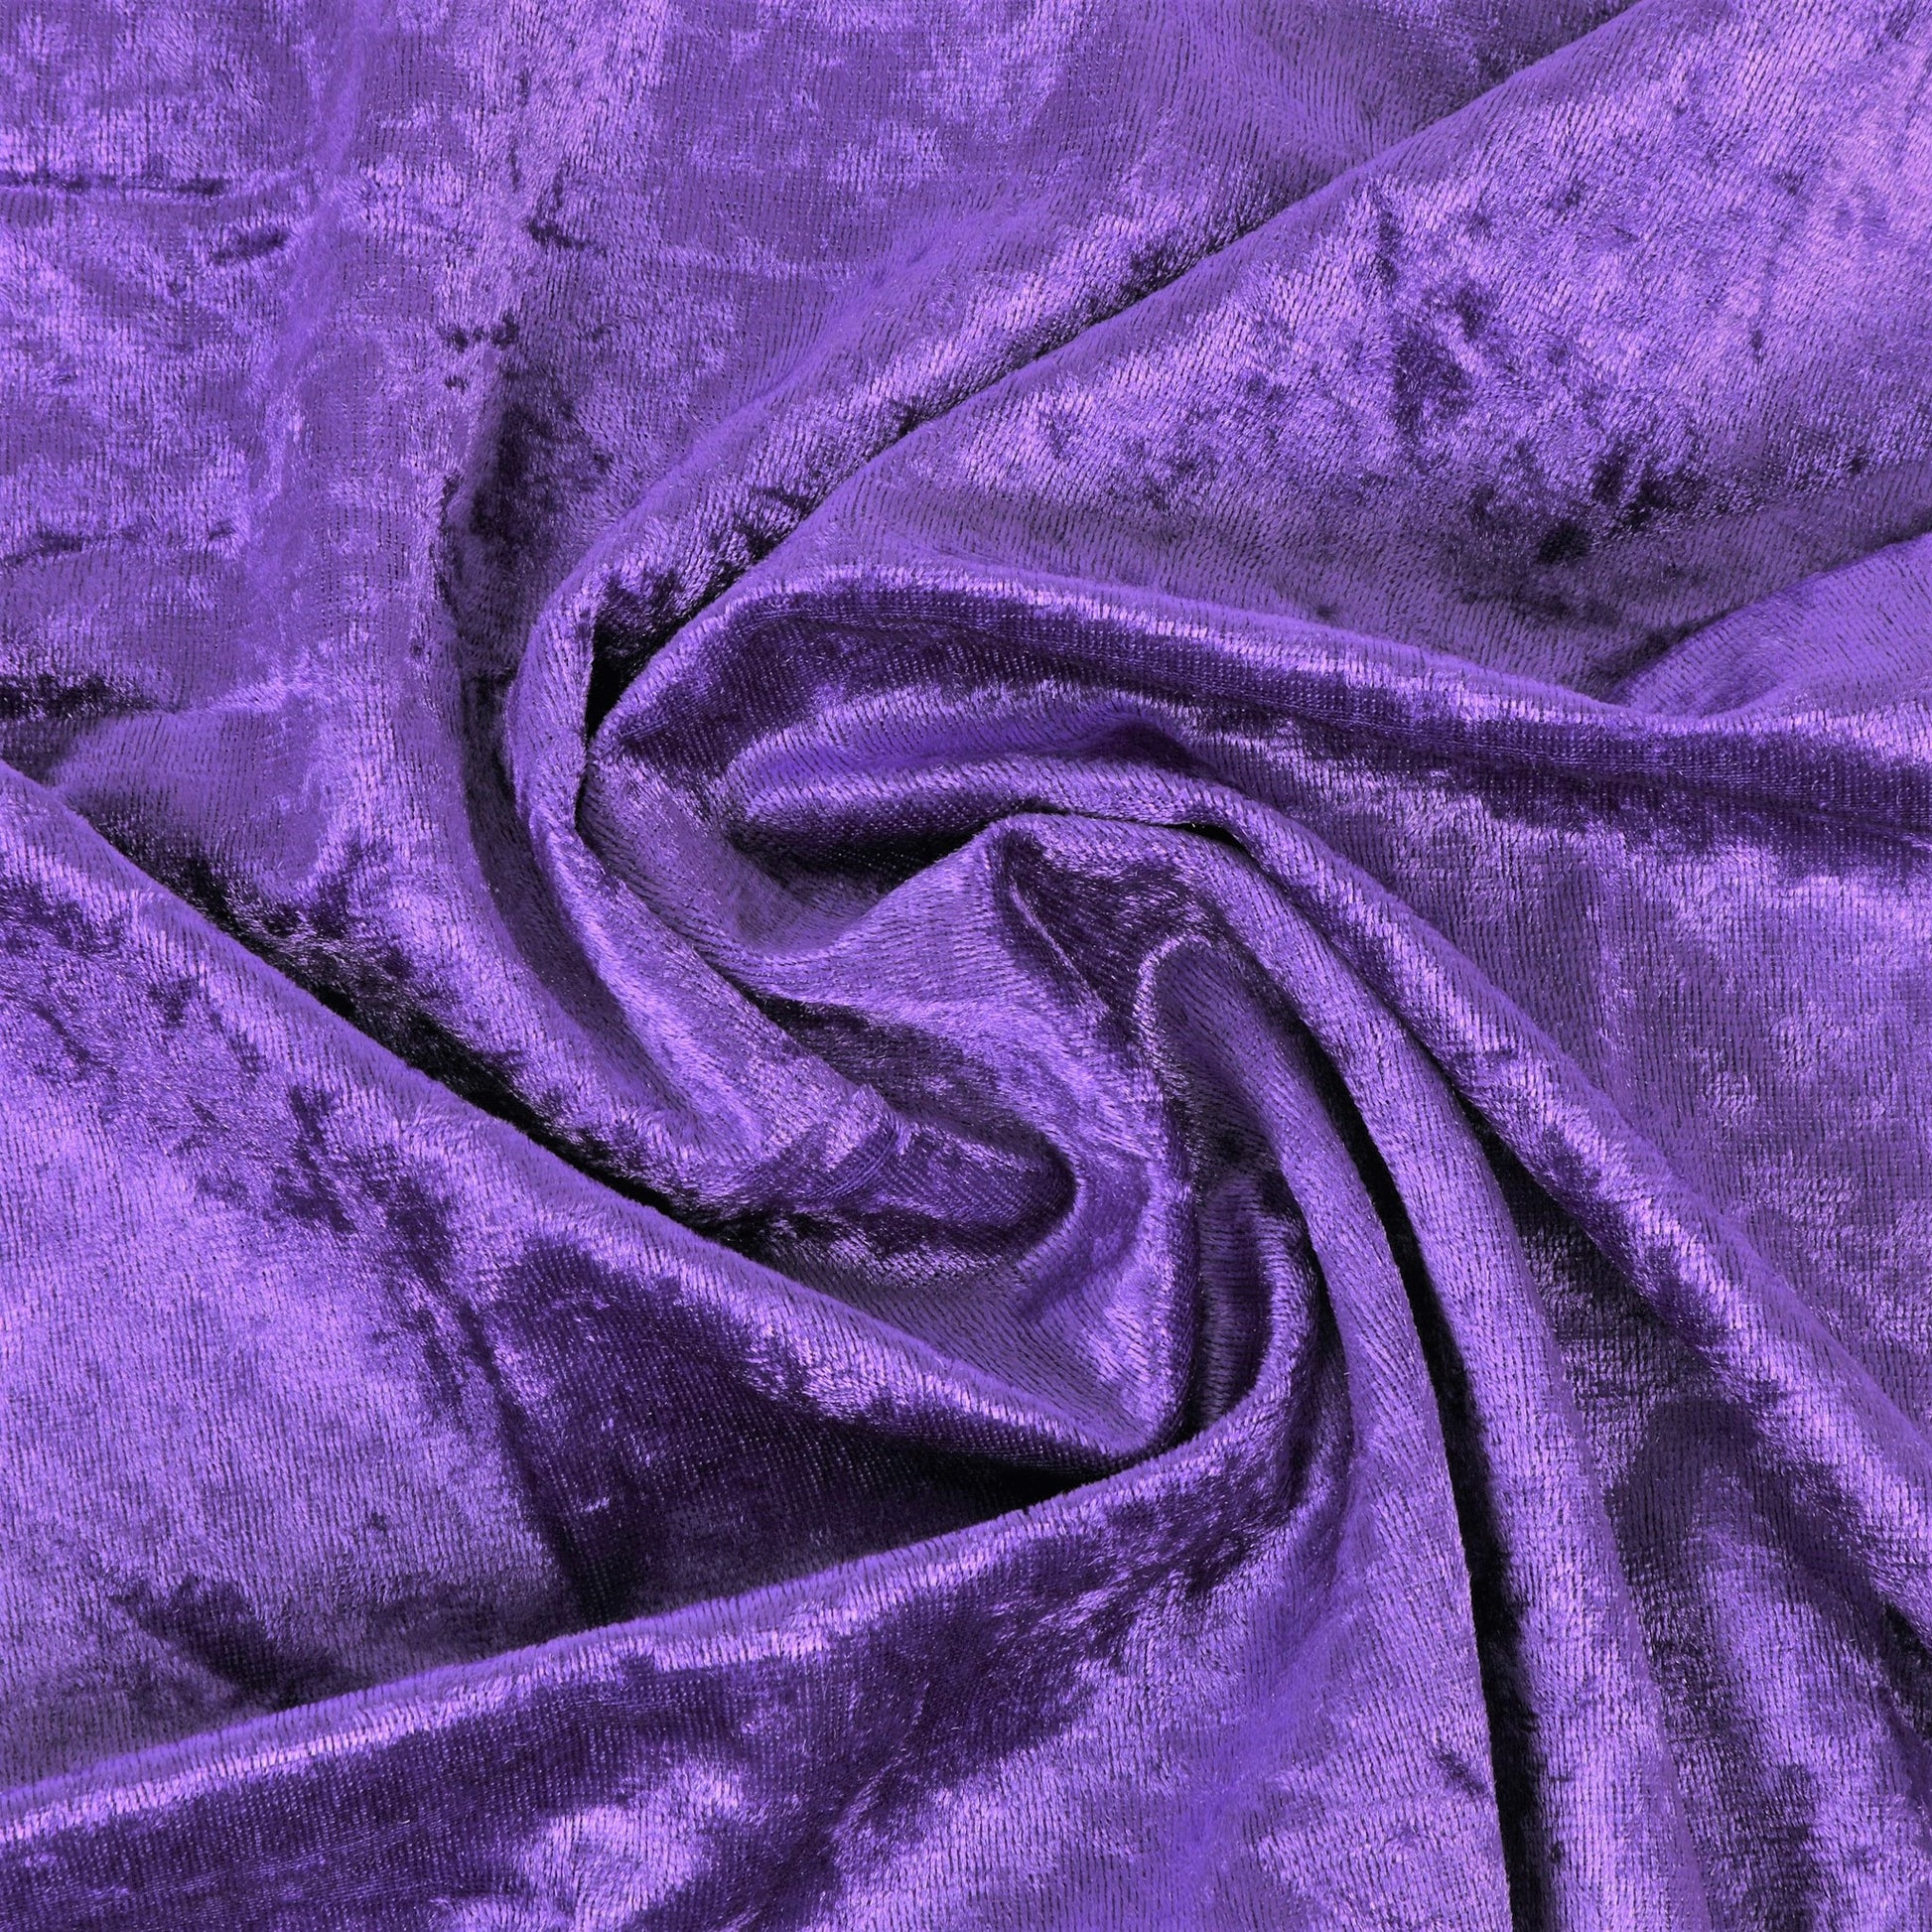 Velvet 12ft H x 52" W Drape/Backdrop Curtain Panel - Purple